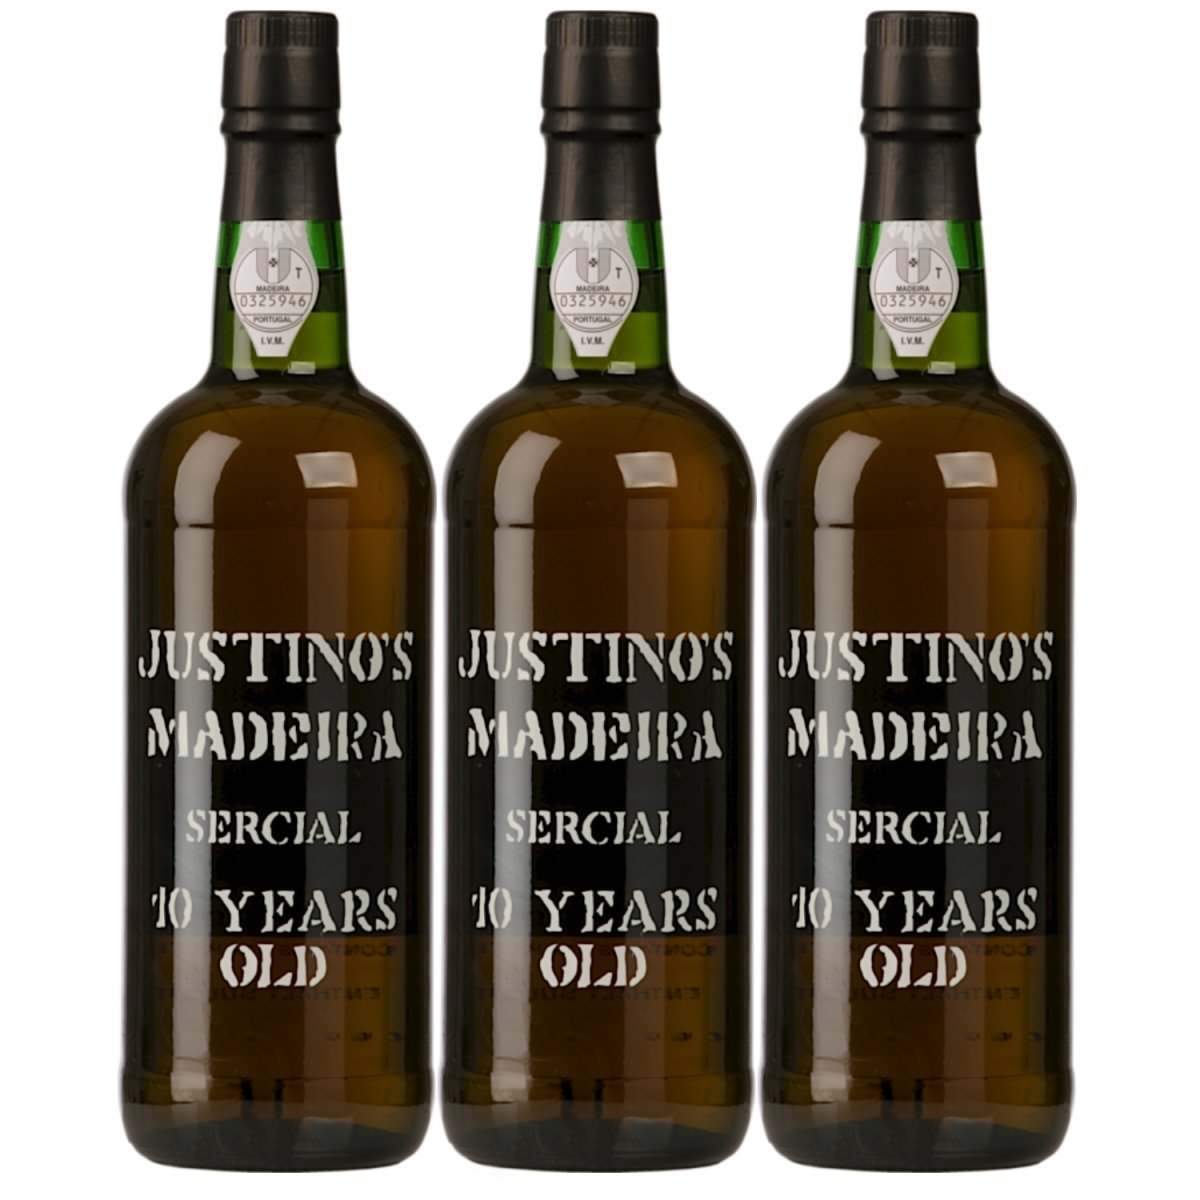 Vinhos Justino Henriques Justino's Sercial 10 Years Old Madeira Likörwein trocken Portugal (3 Flaschen) - Versanel -